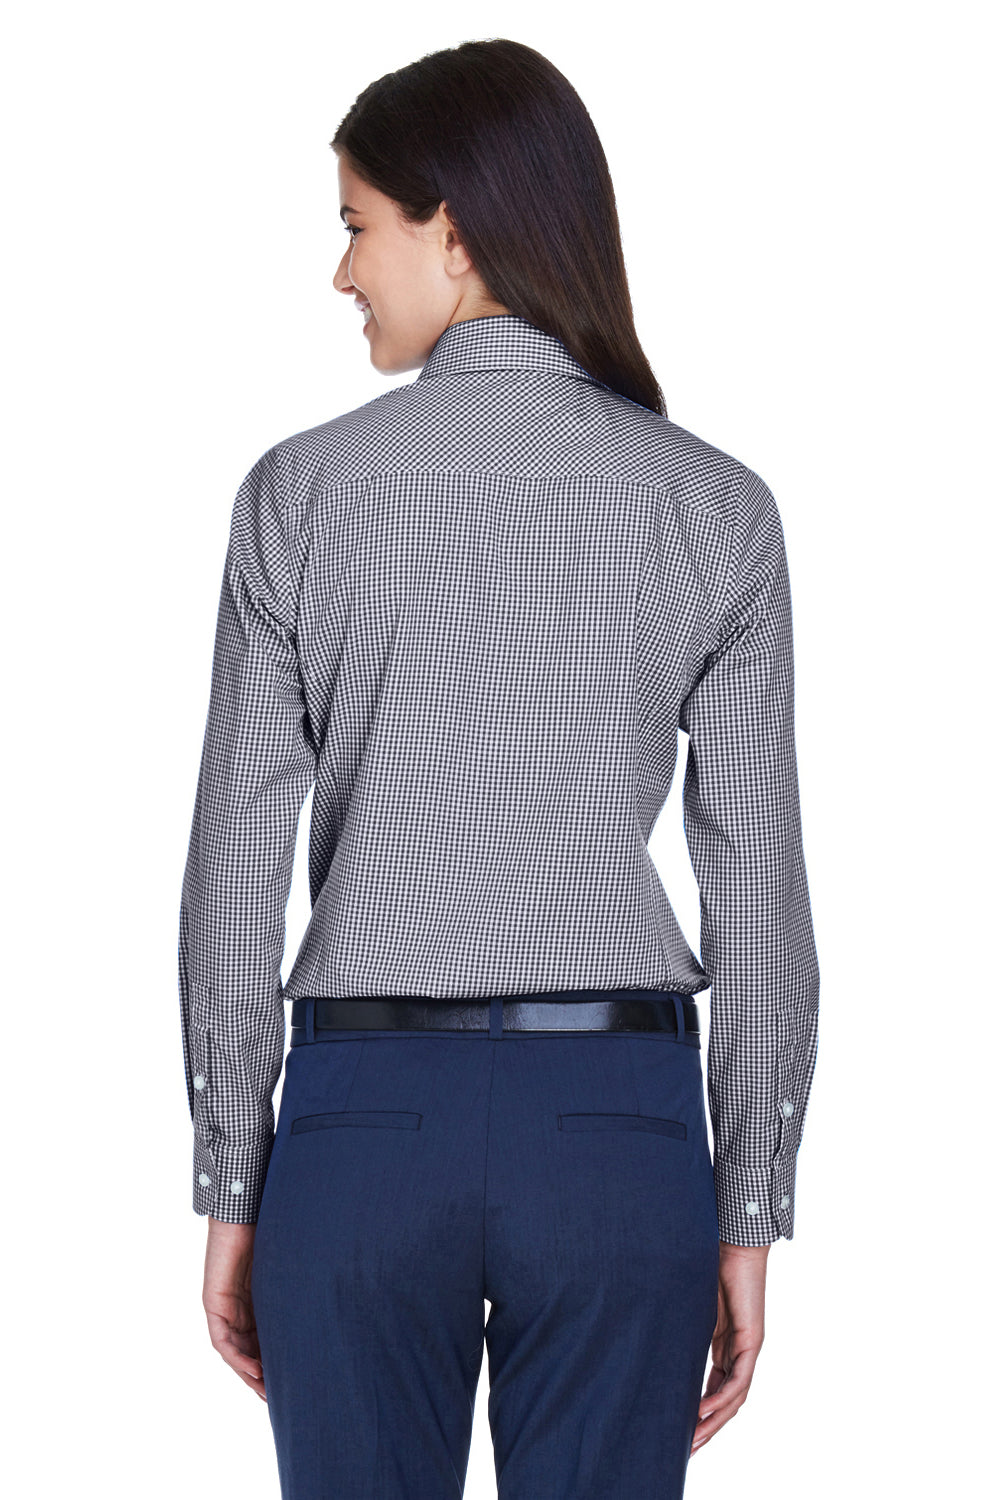 Devon & Jones D640W Womens Crown Woven Collection Wrinkle Resistant Long Sleeve Button Down Shirt Navy Blue Back